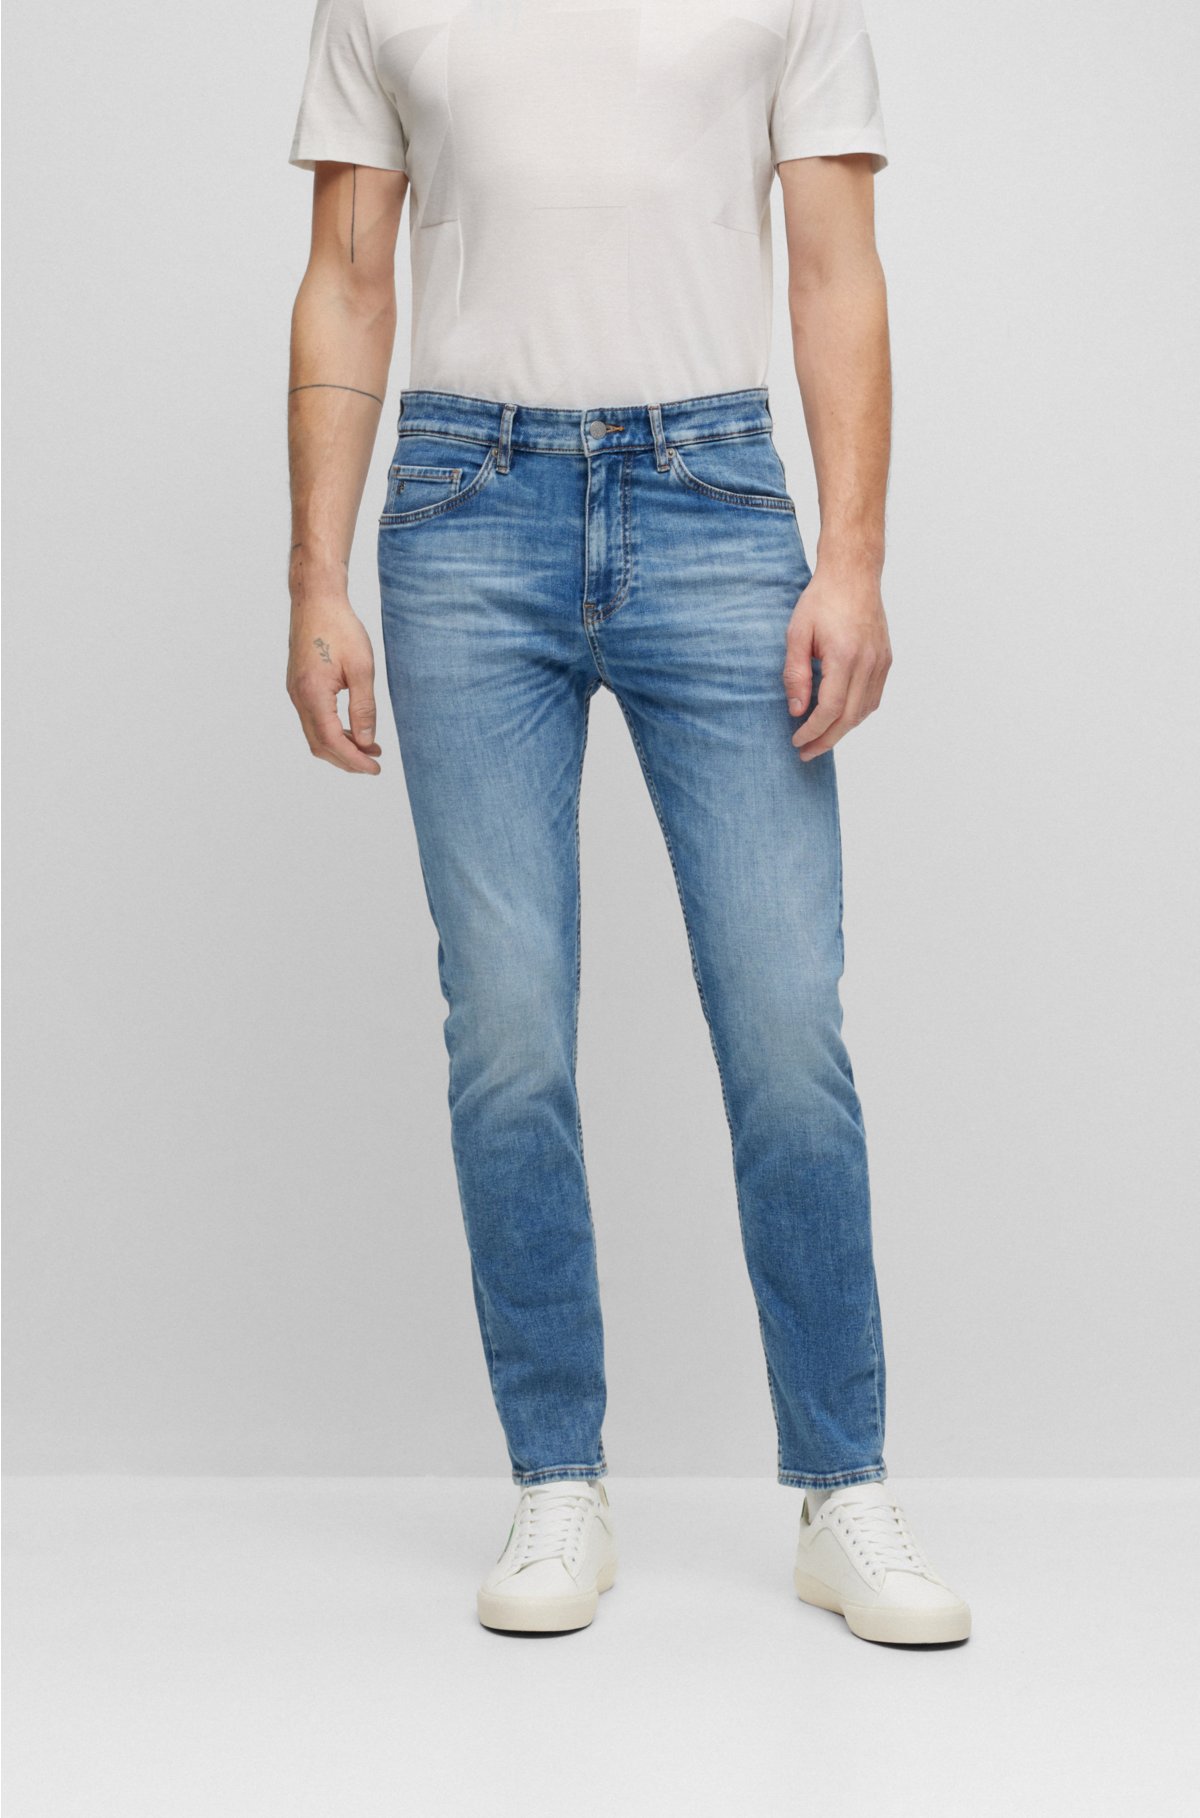 BOSS - denim in mid-blue Tapered-fit Italian jeans stretch